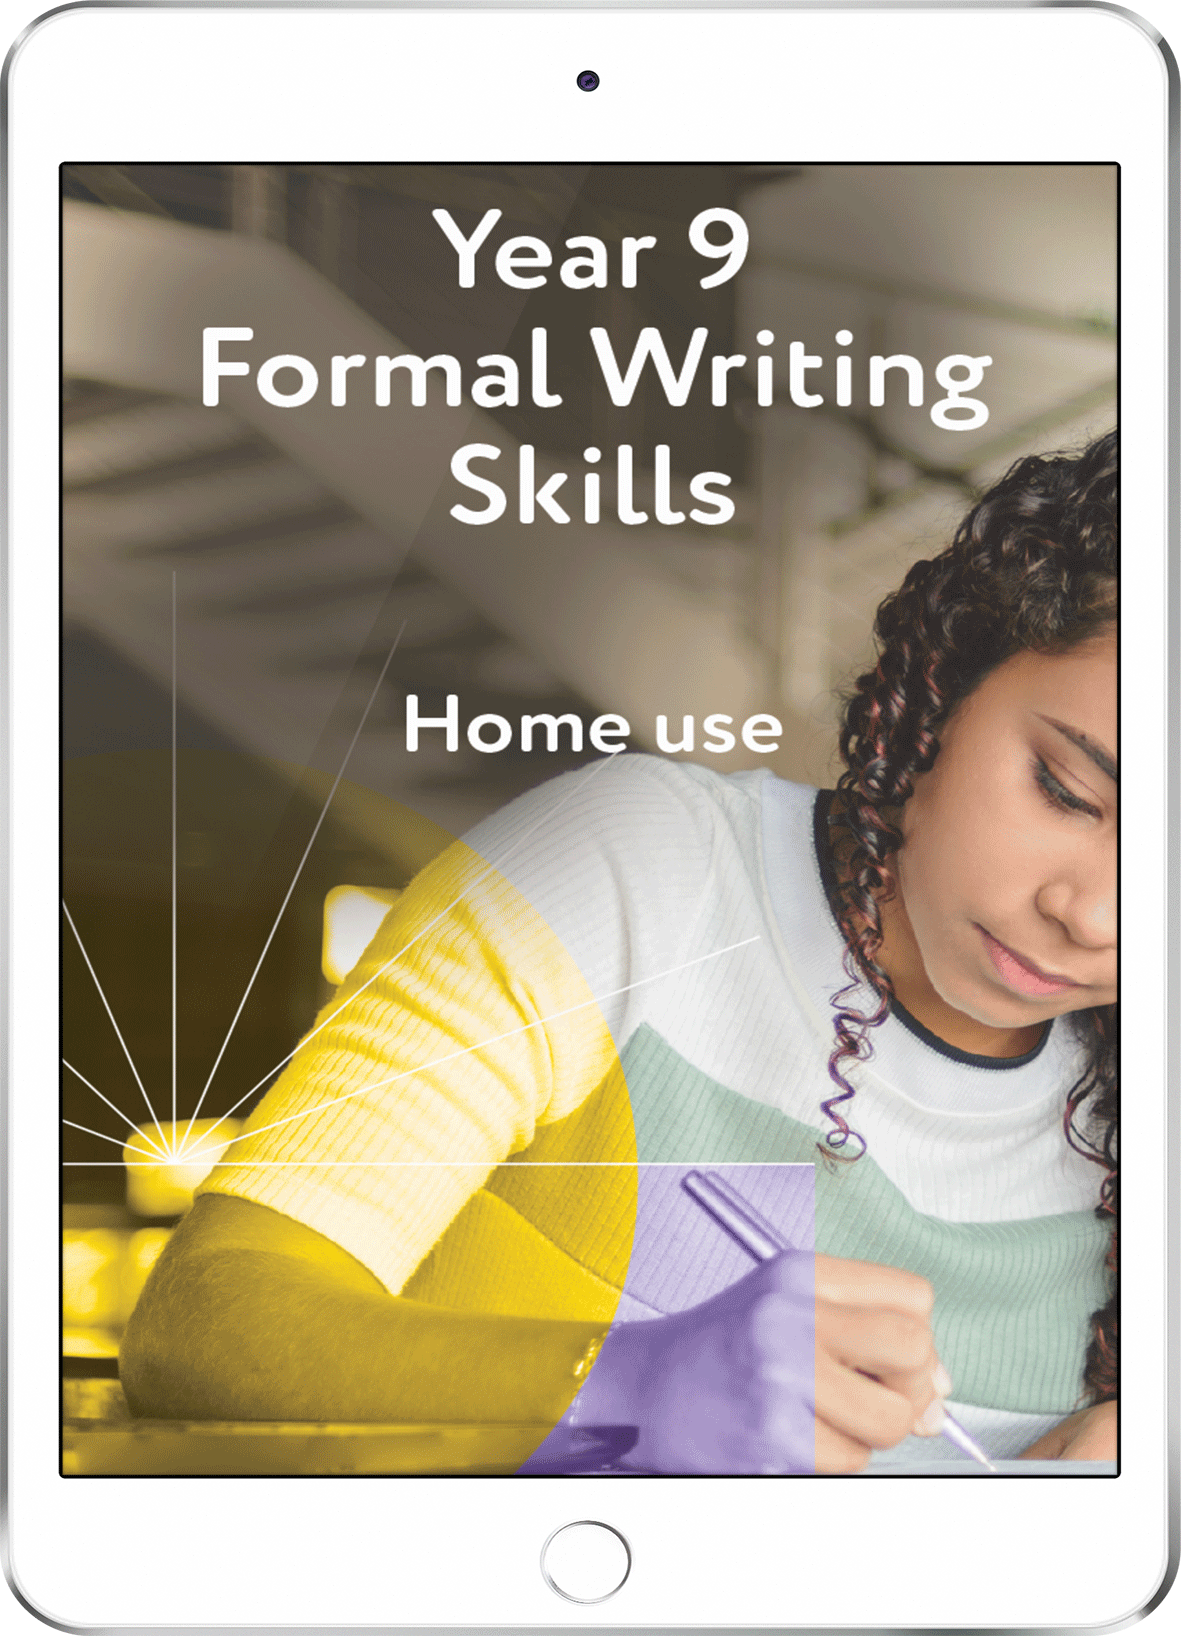 Year 9 Formal Writing Skills - Home Use